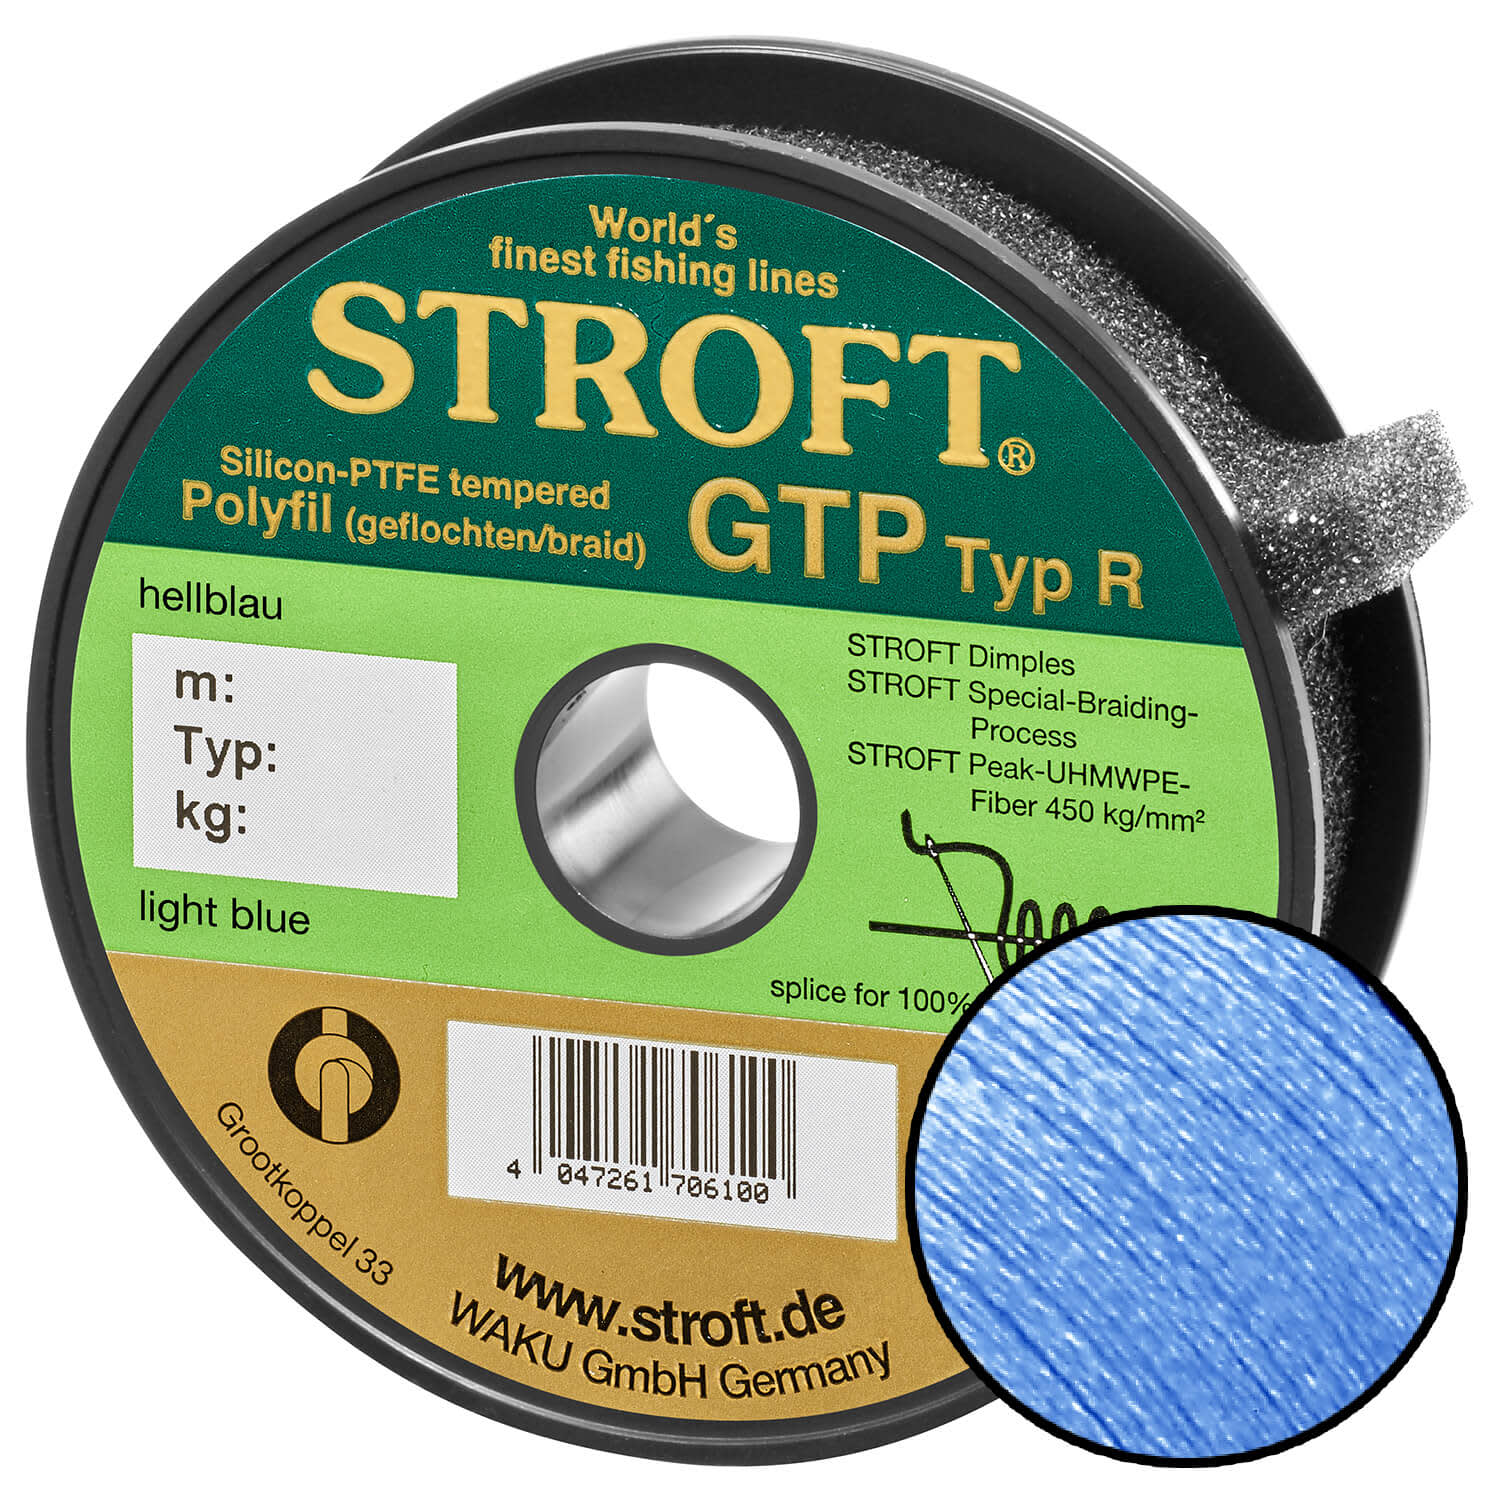 STROFT GTP Type R Braided Fishing Line 125m light blue buy by Koeder Laden